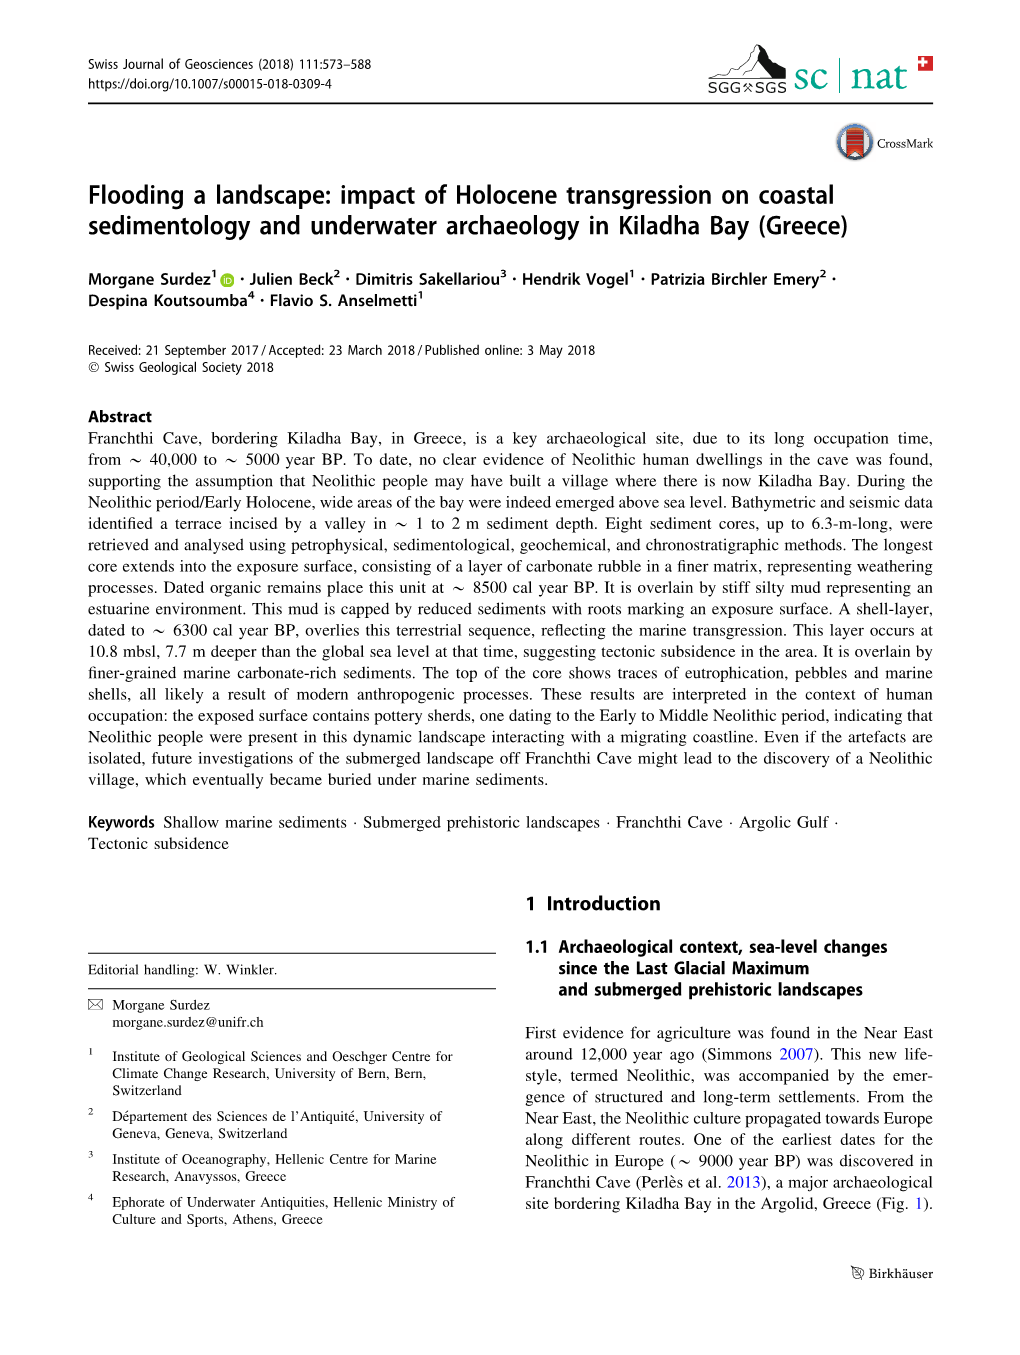 Flooding a Landscape: Impact of Holocene Transgression on Coastal Sedimentology and Underwater Archaeology in Kiladha Bay (Greece)